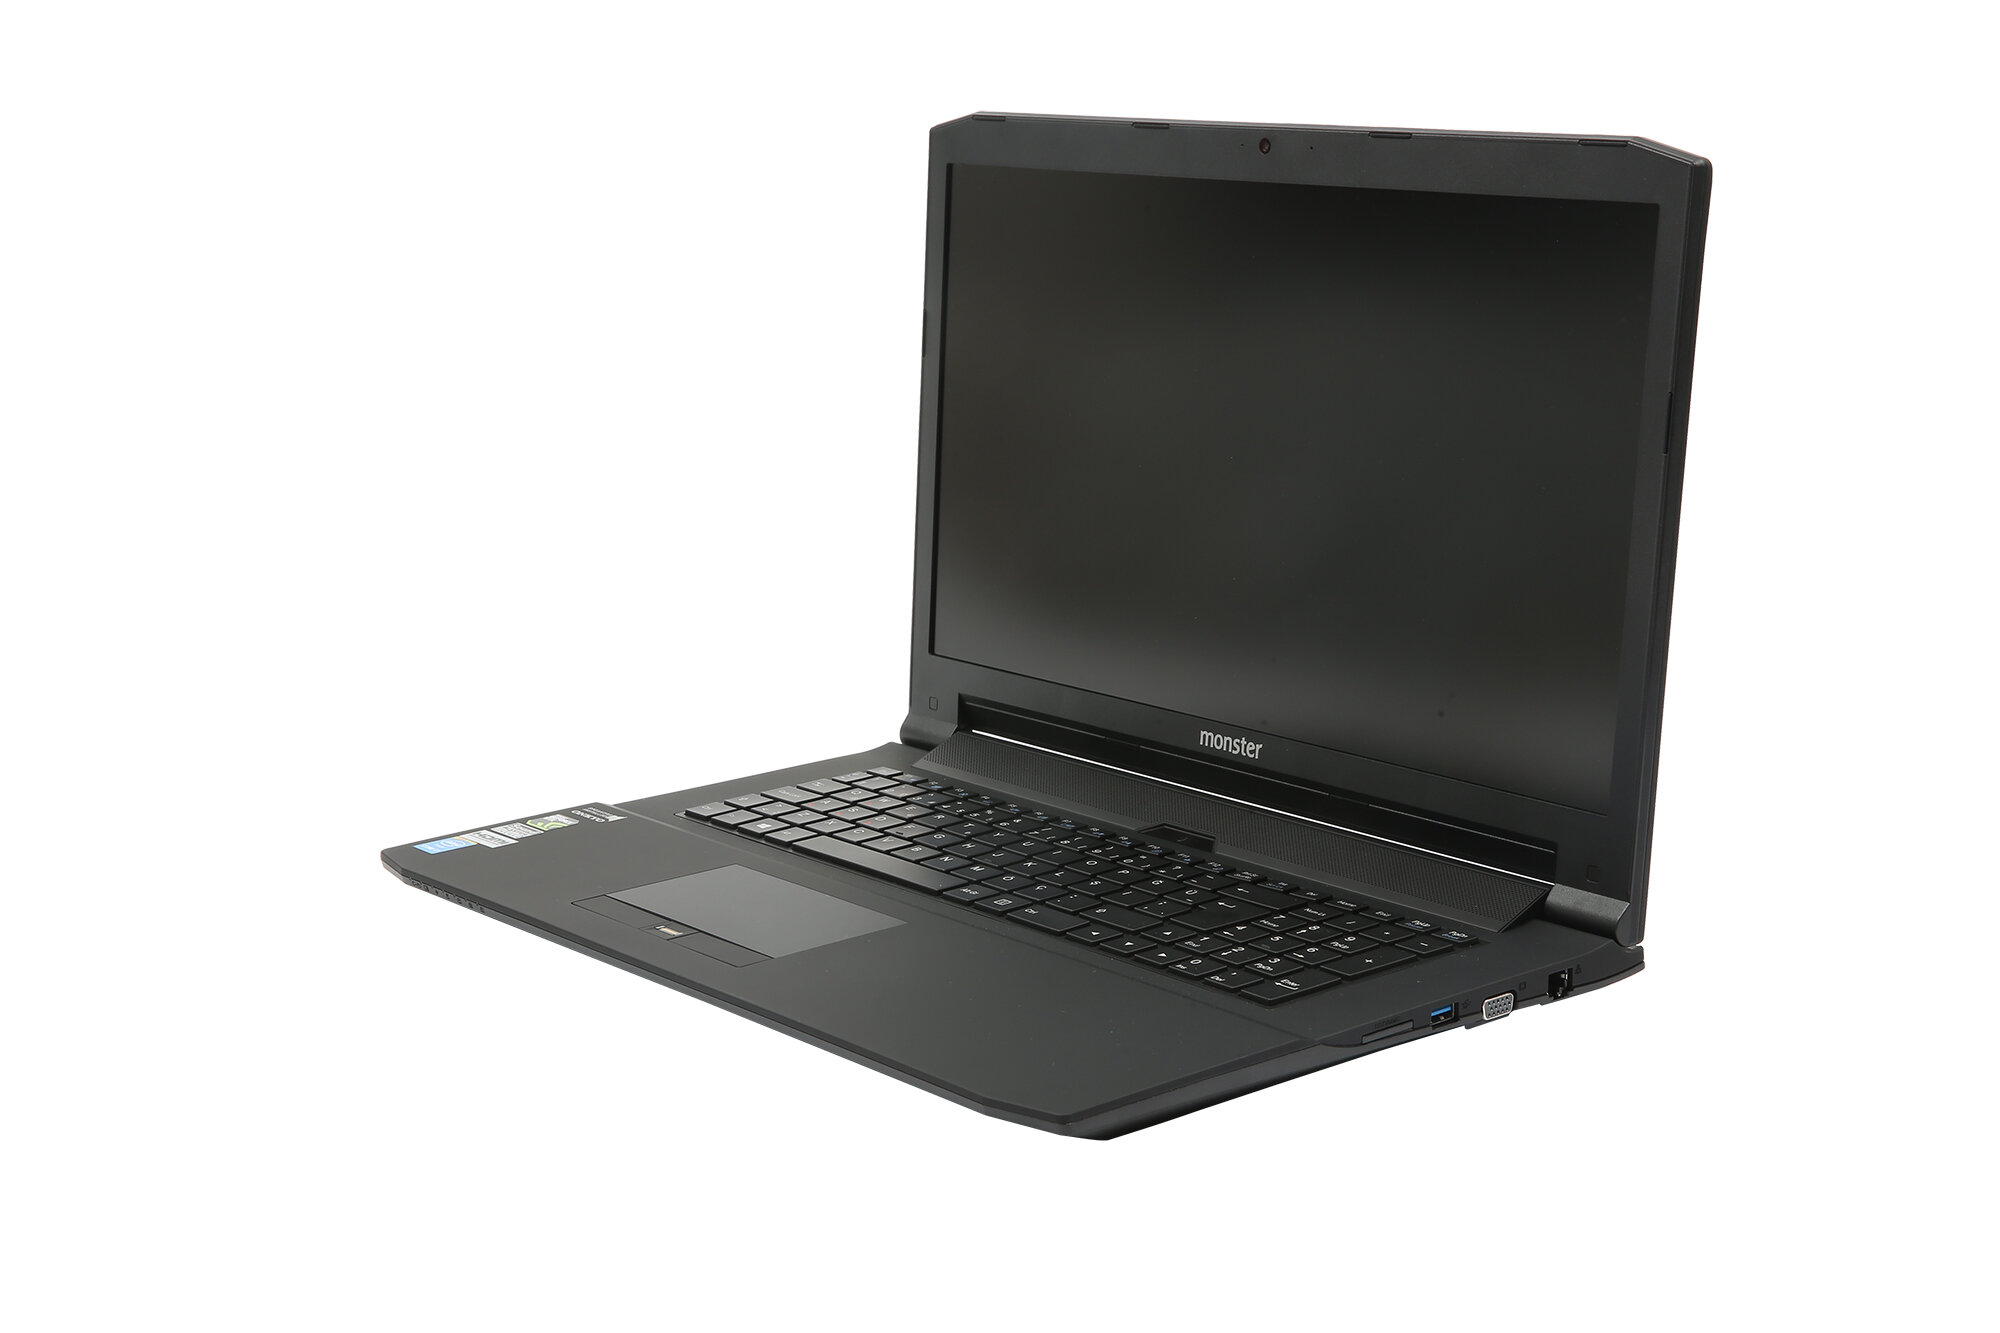 Abra A7 V6.2.1 17.3" Gaming Laptop 13388